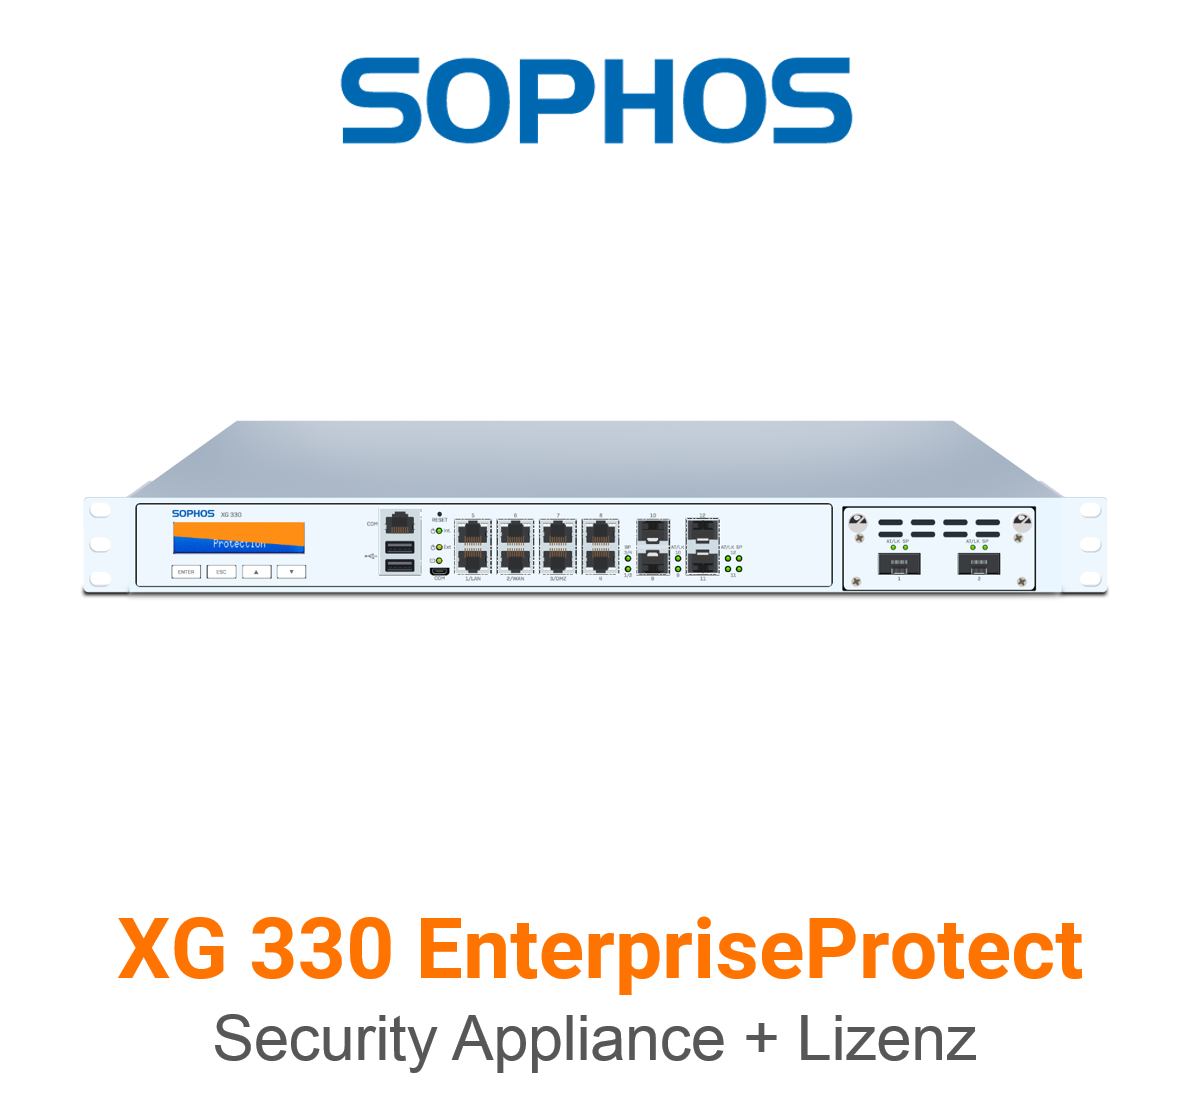 Sophos XG 330 EnterpriseProtect Bundle (Hardware + Lizenz)